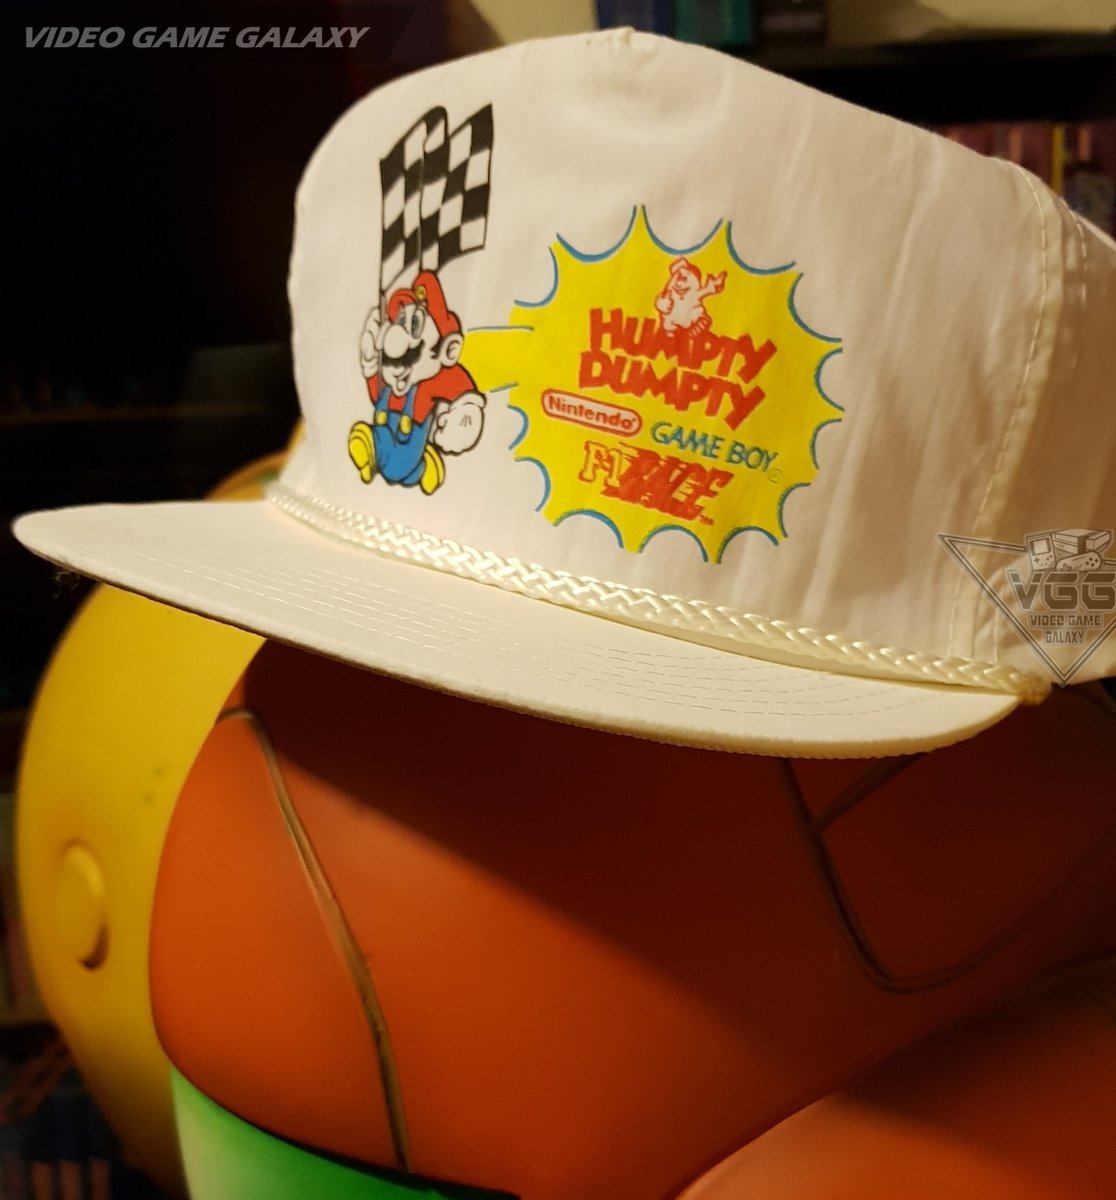 F1 Race Cap Nintendo Gameboy for Humpty Dumpty 

#f1race #humptydumpty #gameboy #gb #DMG #Nintendo #Videogames #Retro #Retrogames #retrogaming #oldies #collectibles #collector